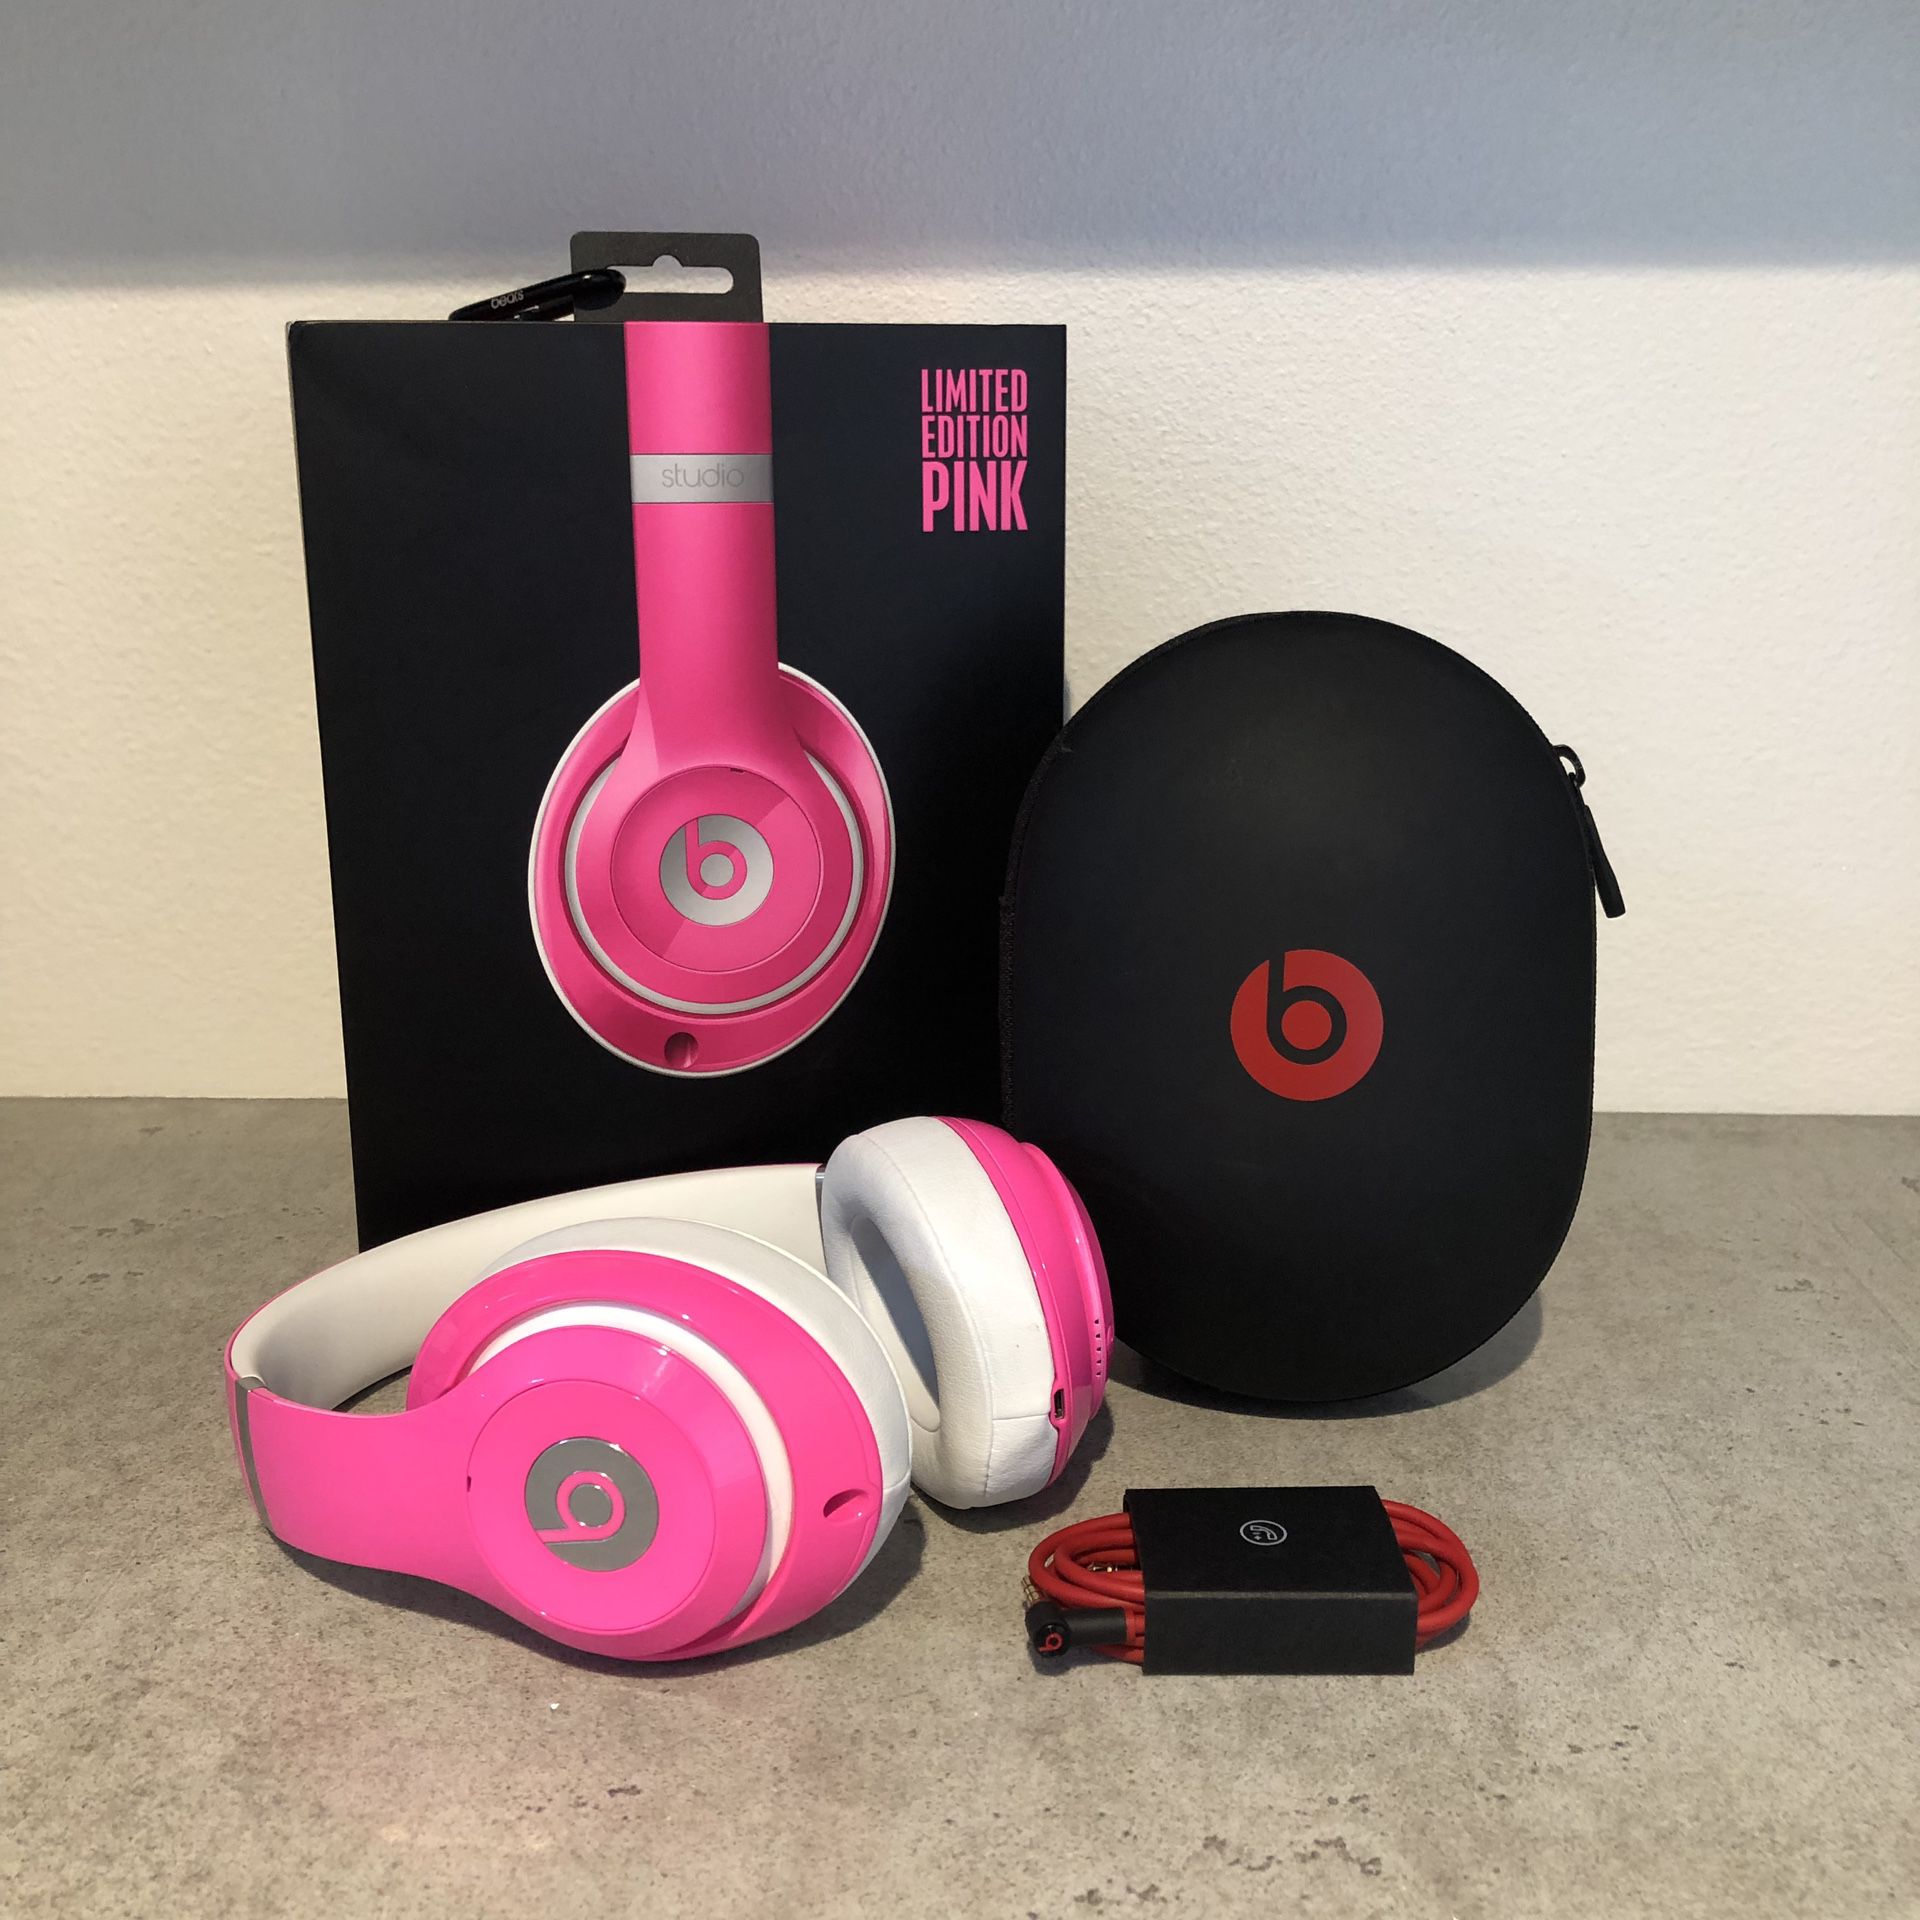 Limited edition pink beats studio headphones